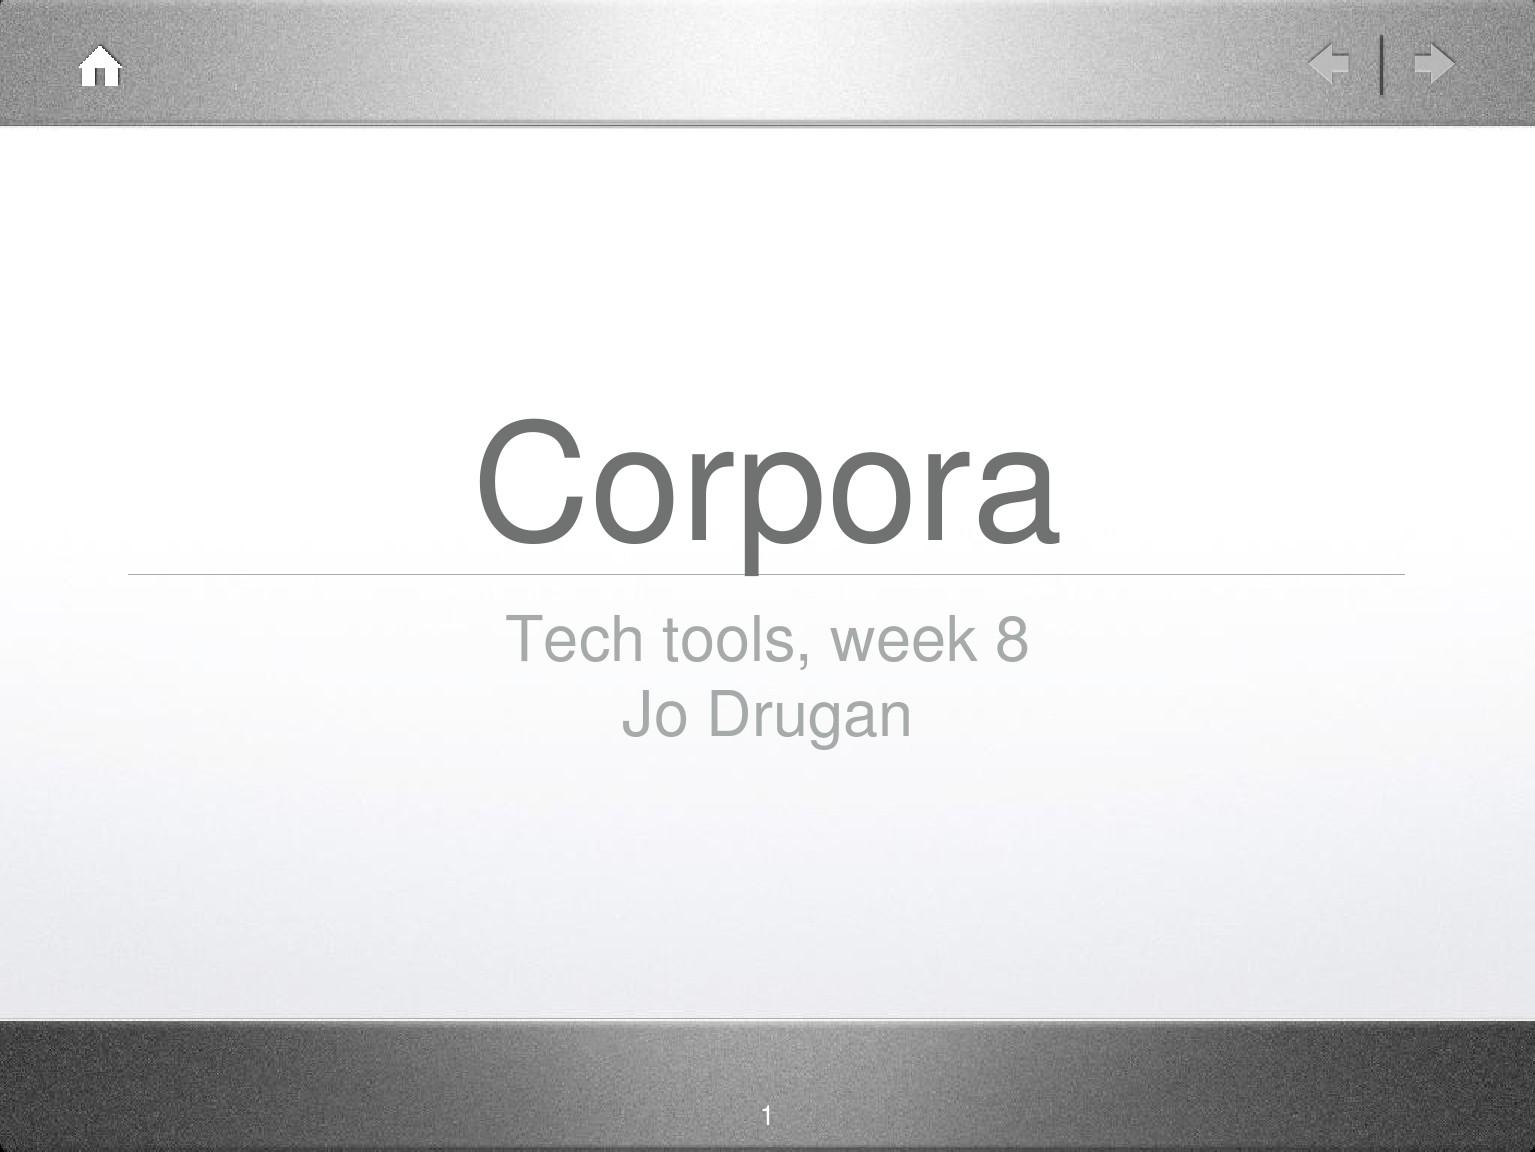 Presentation 6-Corpora-week 8 翻译辅助资源与软件